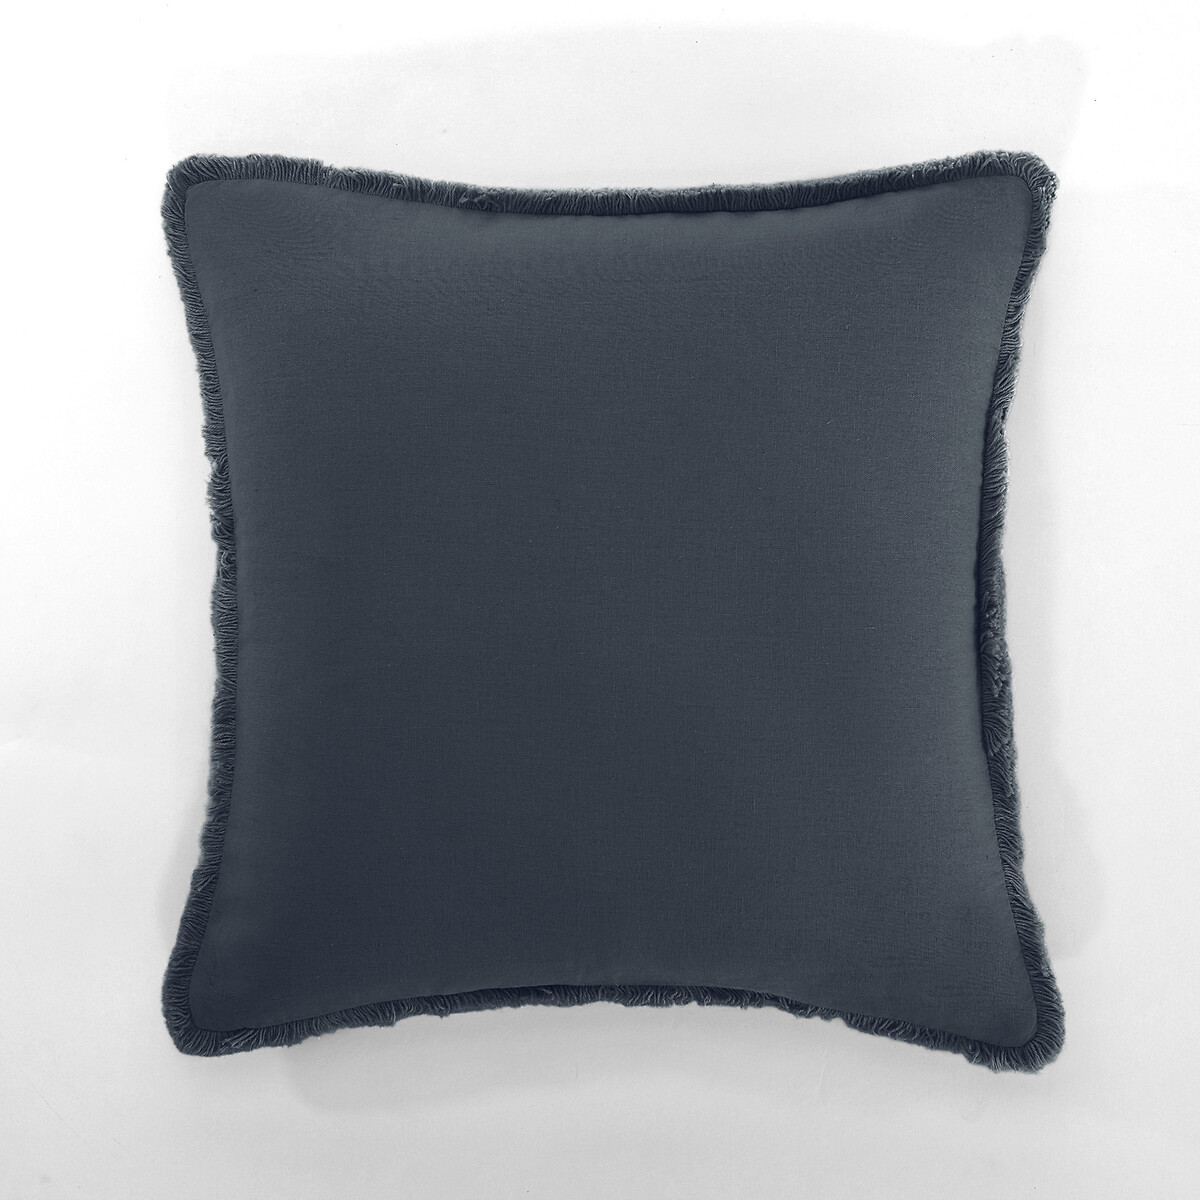 Чехол на подушку из льнавискозы ODORIE 40 x 40 см синий чехол на подушку 40 x 40 см ricochet 40 x 40 см разноцветный